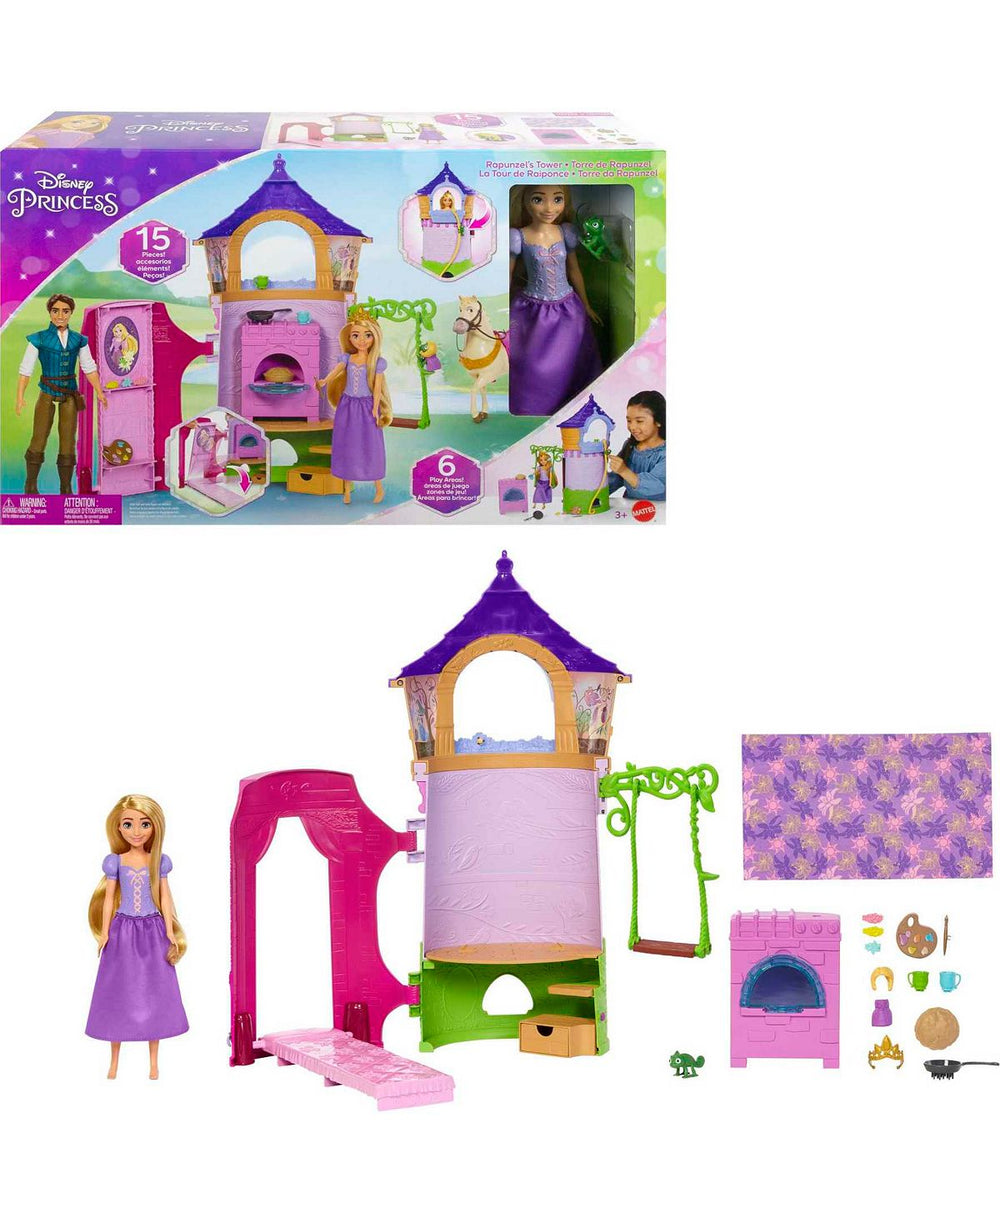 Disney Princess Rapunzel's Tower Playset - Enchanted Adventure Set